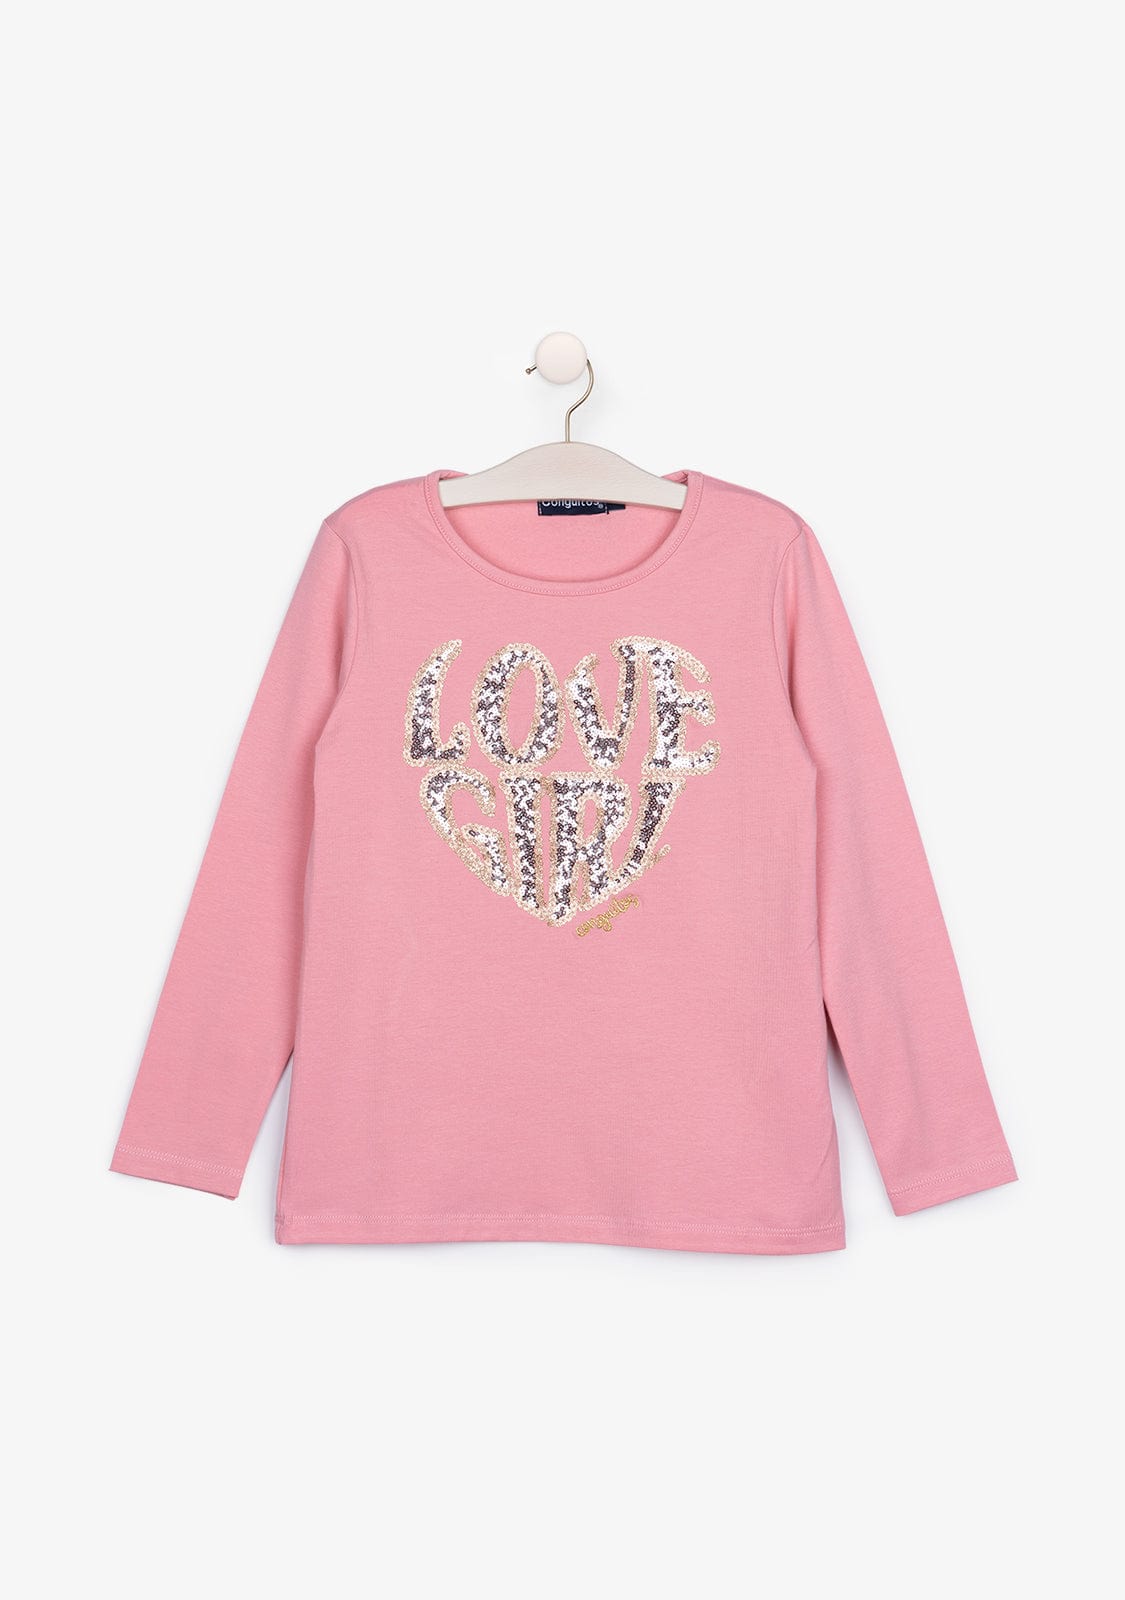 CONGUITOS TEXTIL Clothing Girl's Pink Sequins T-shirt